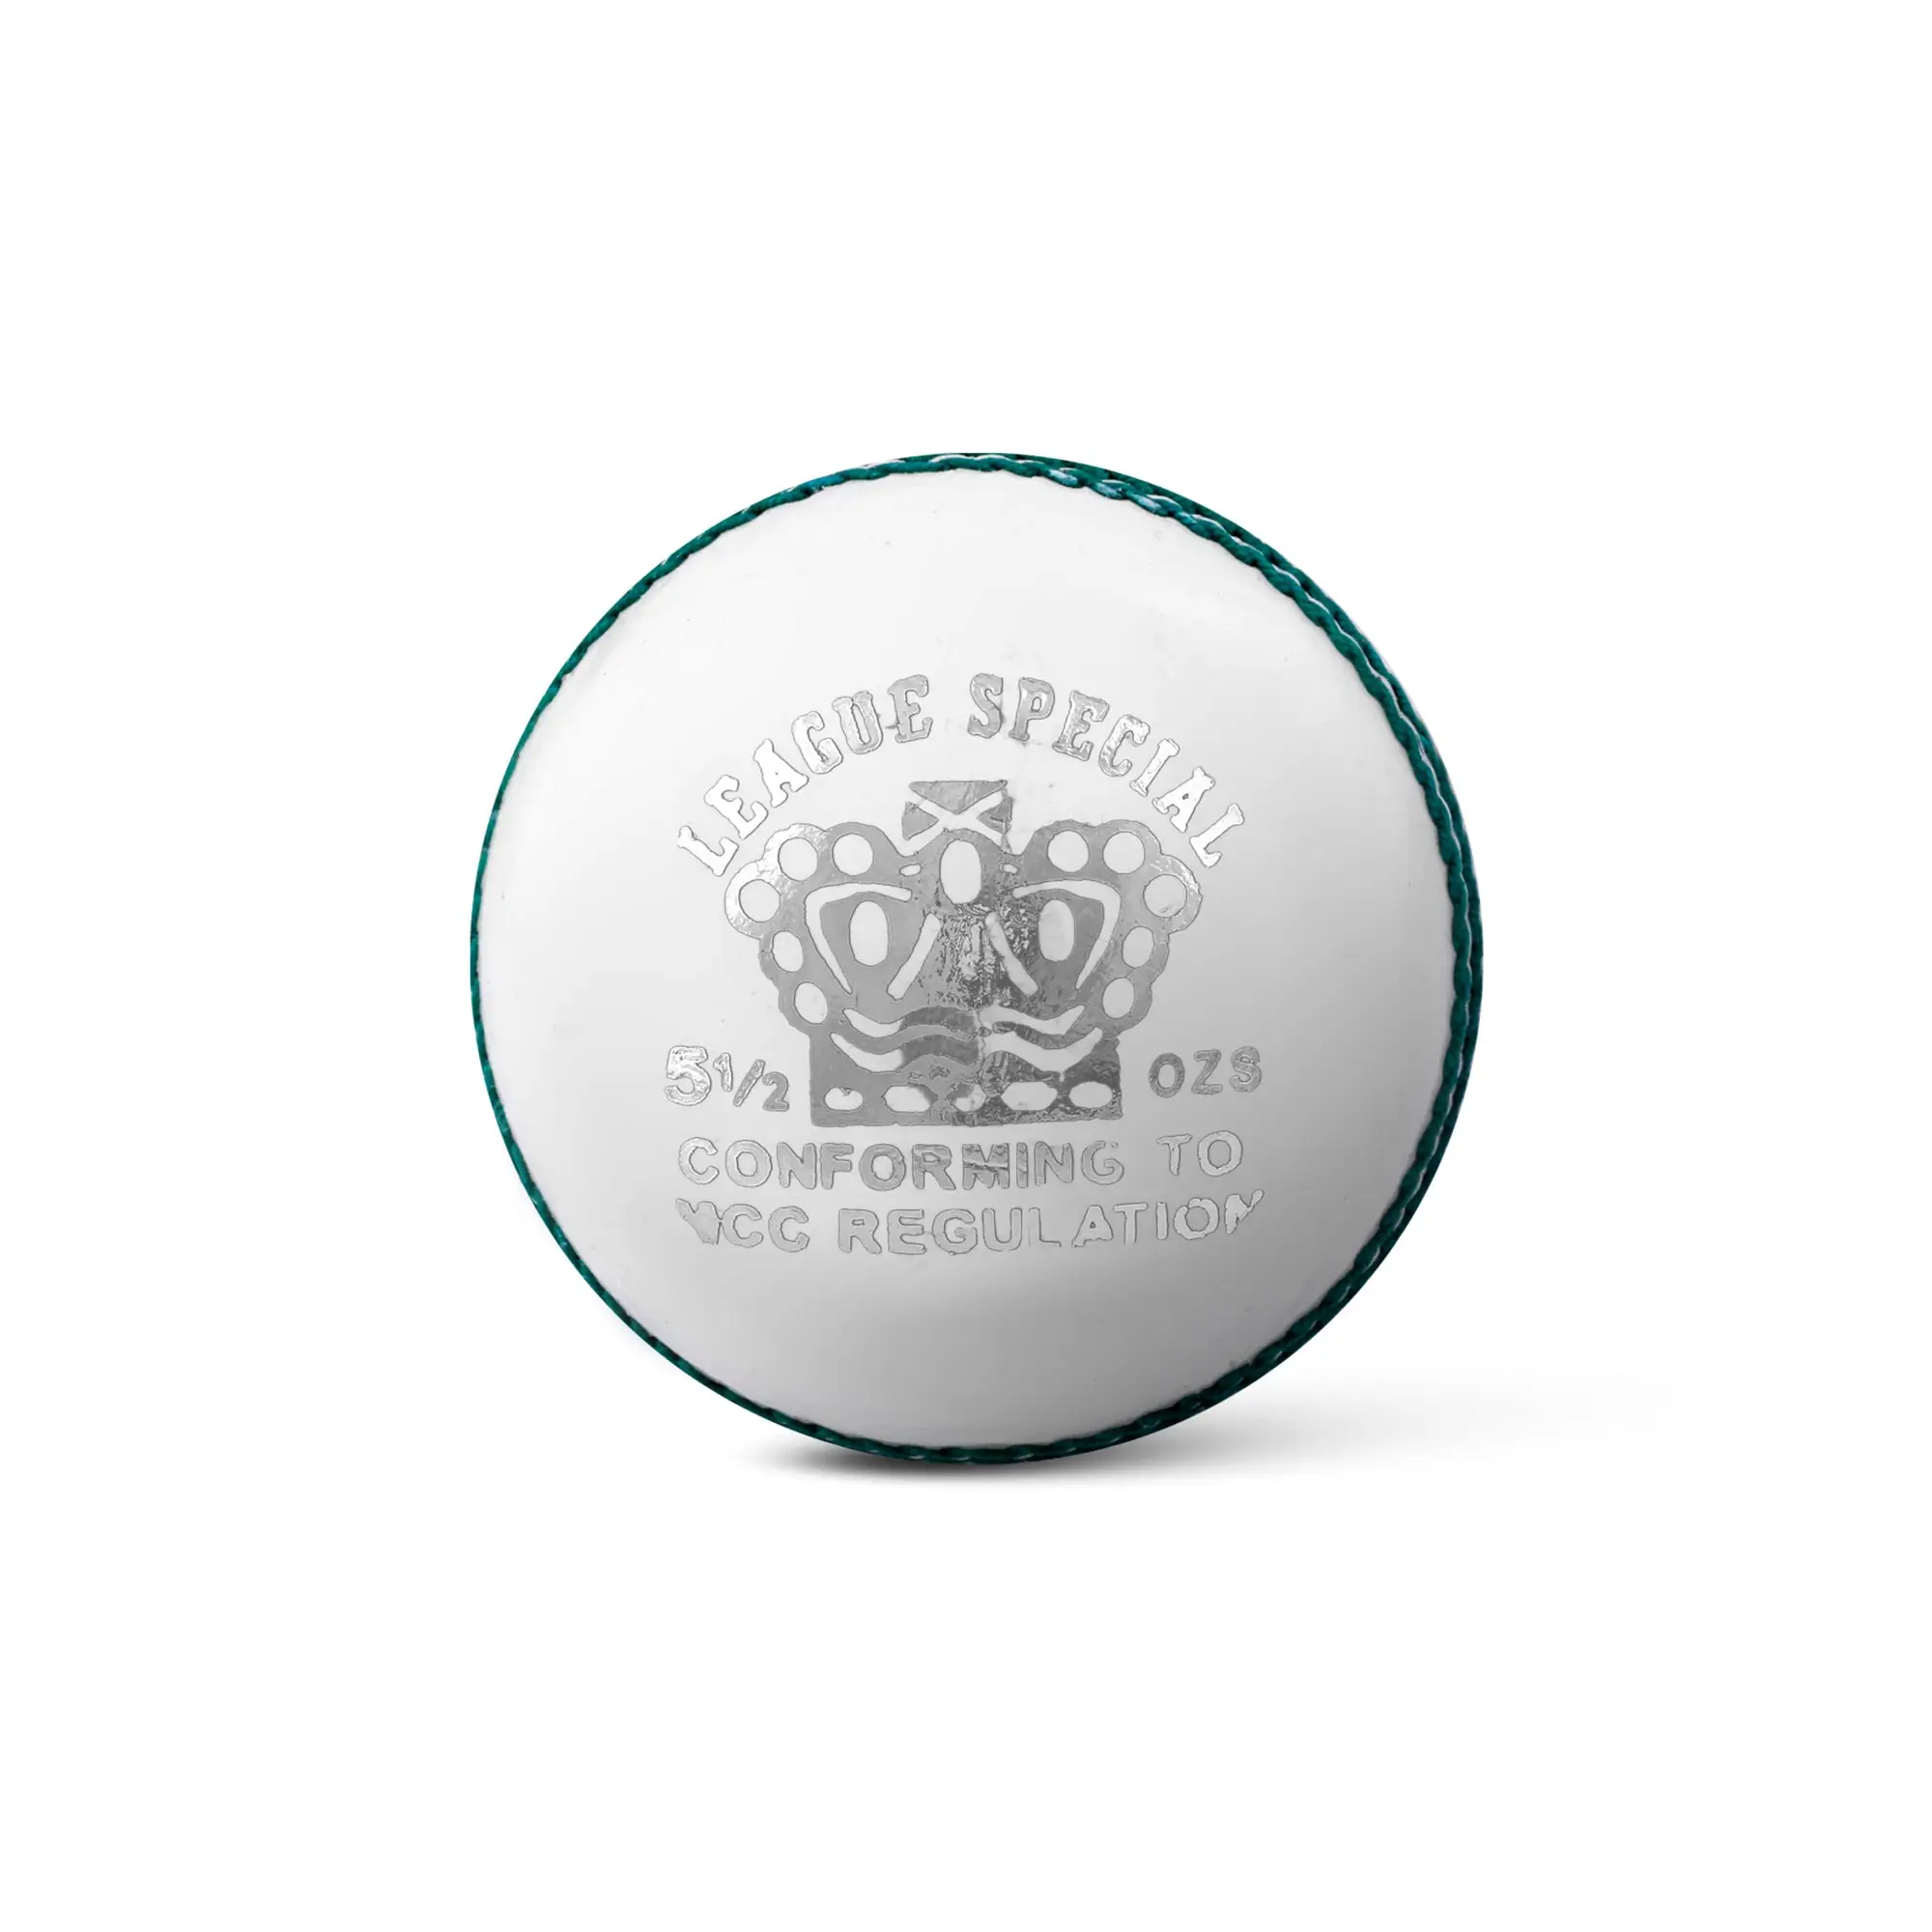 CA League Special Cricket Hard Ball Premium Quality Chrome Leather - Senior / White - BALL - 4 PCS LEATHER